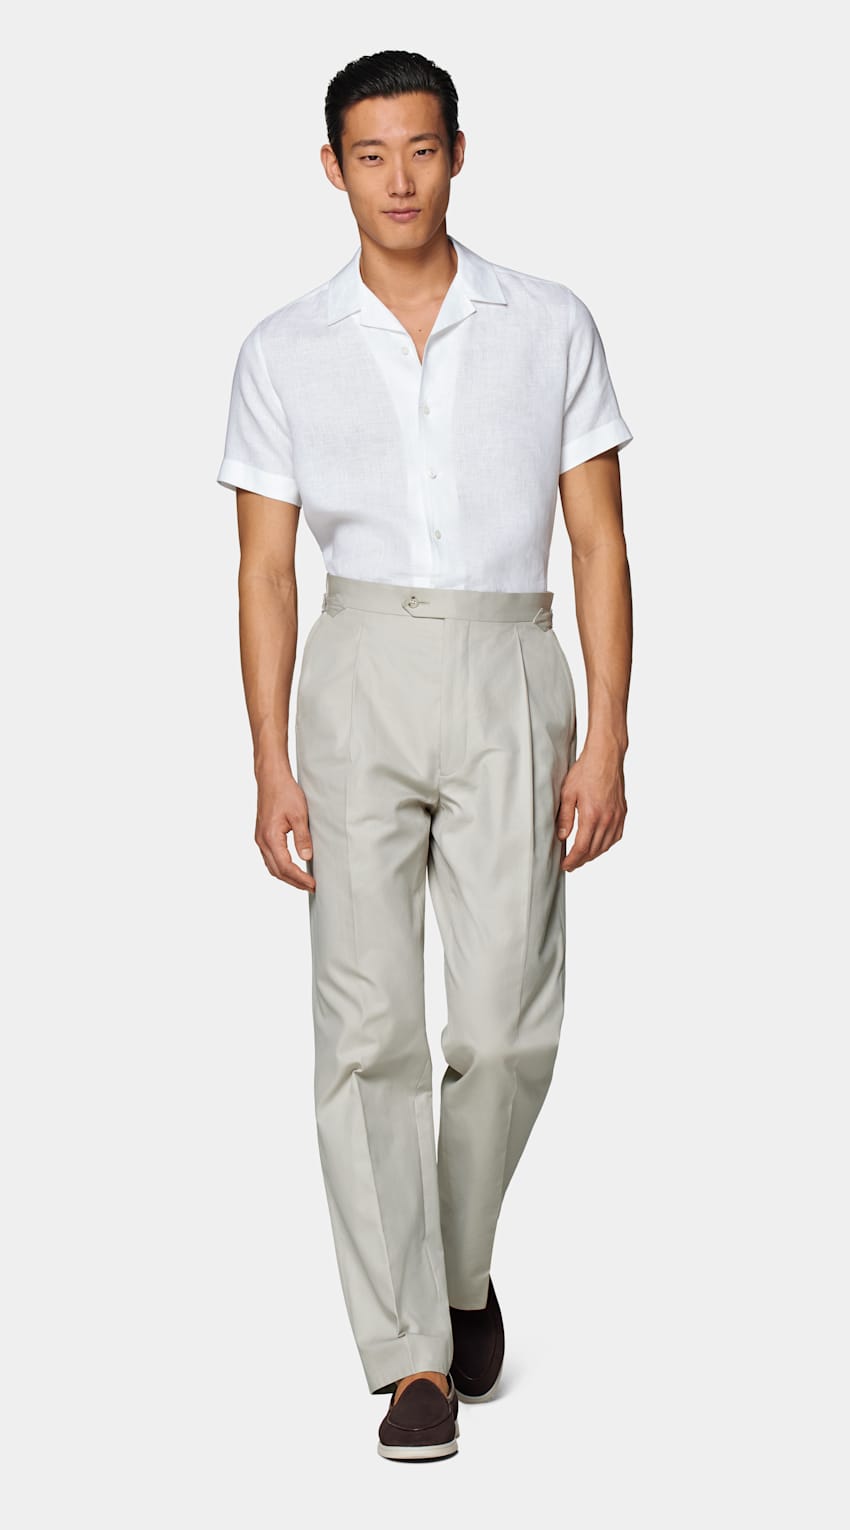 SUITSUPPLY Pur lin - Albini, Italie Chemise coupe ajustée blanche col cubain